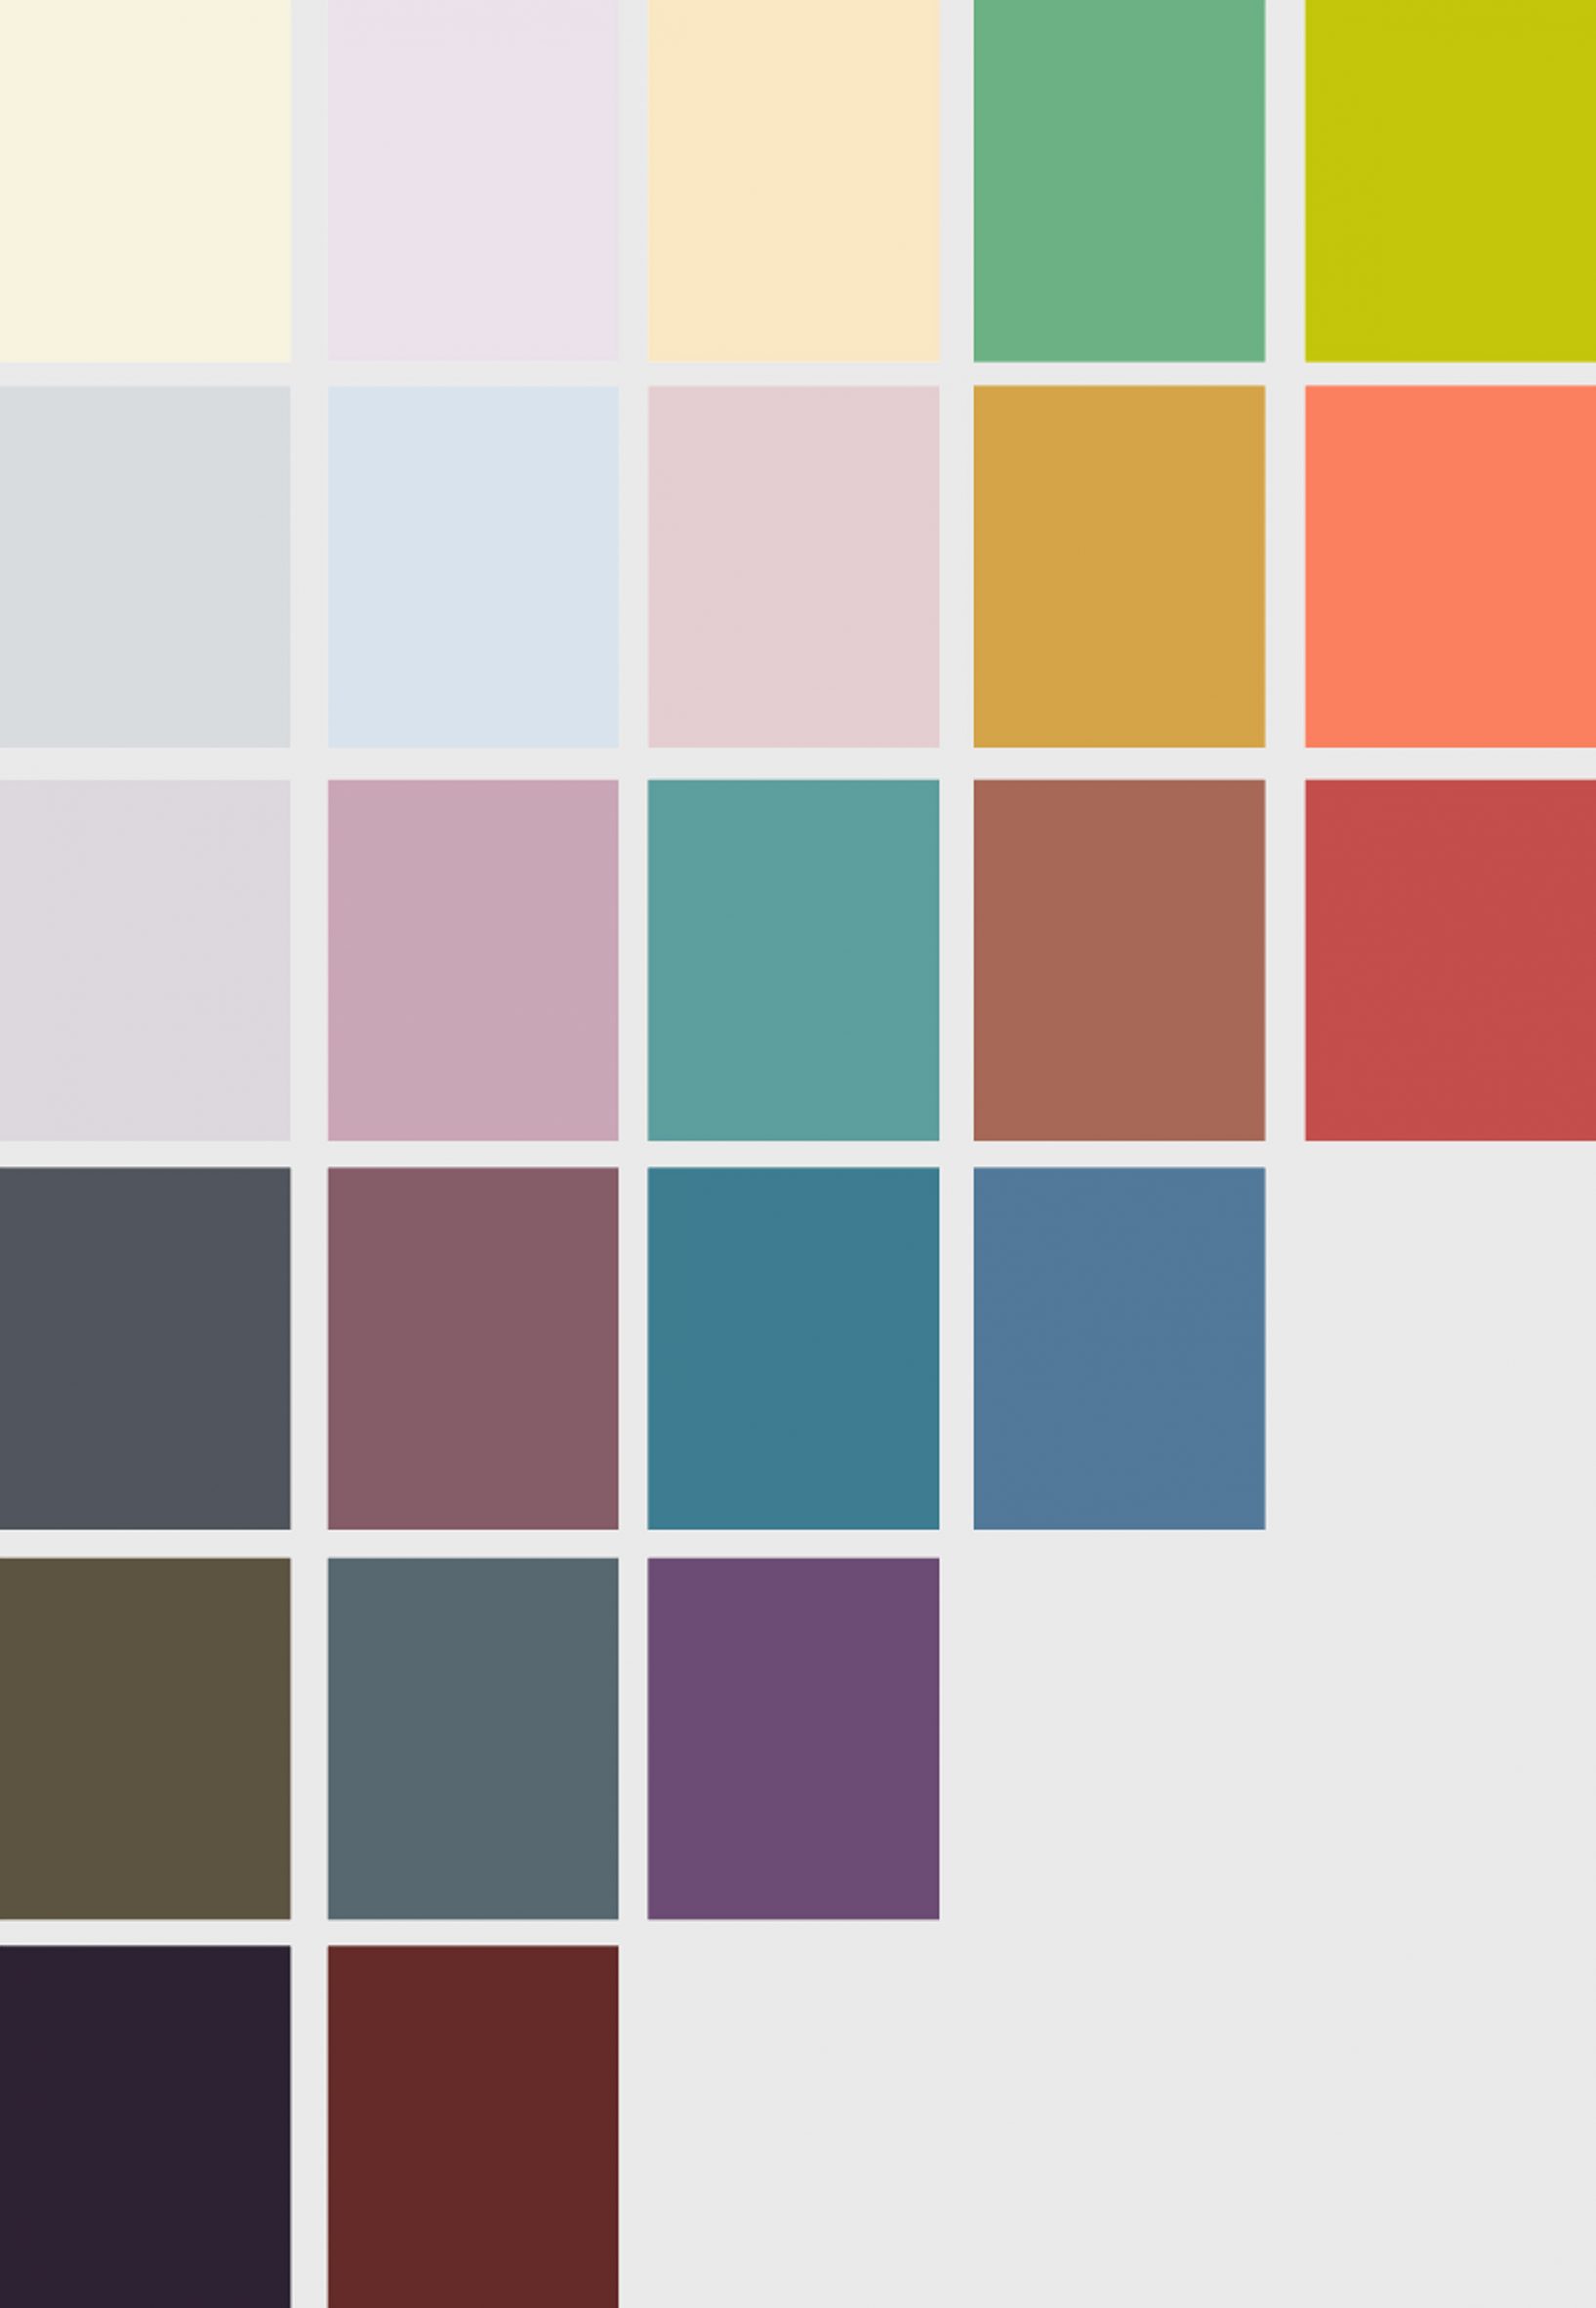 Colour samples as part of NSC's Colour Report